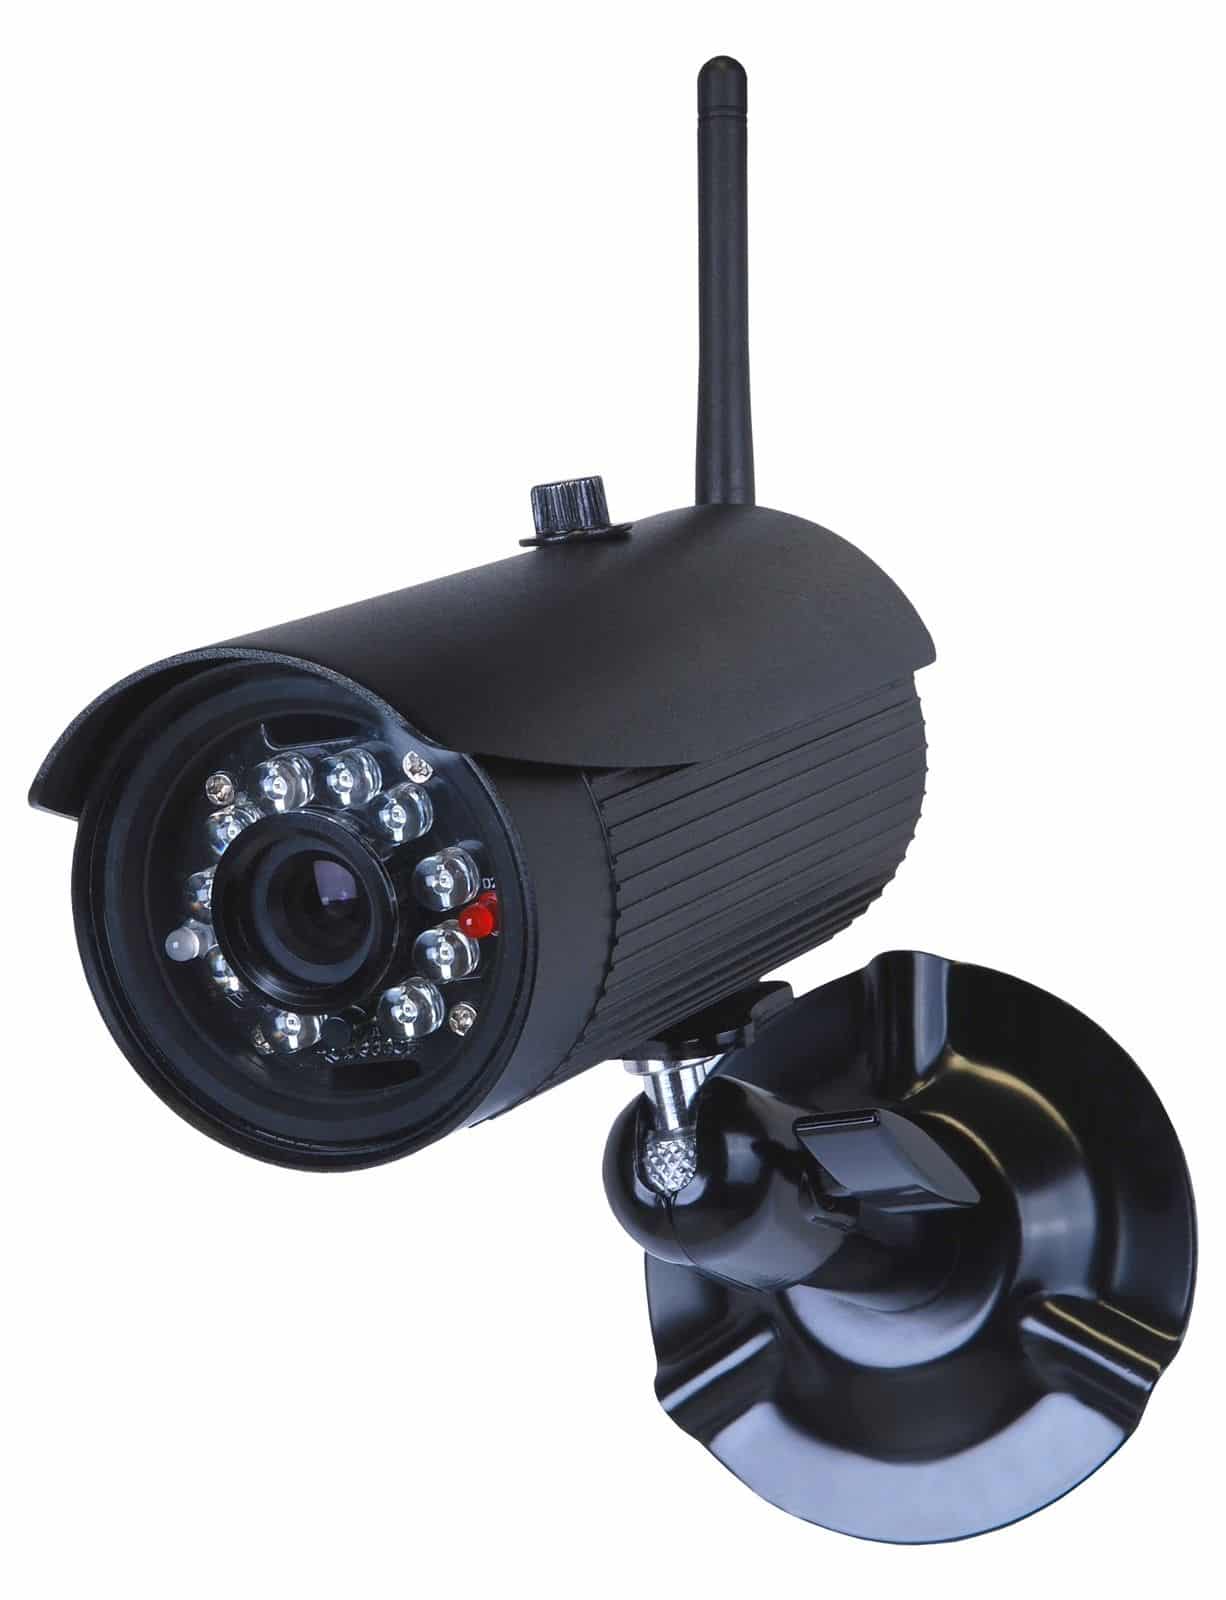 Security Camera - Myfox